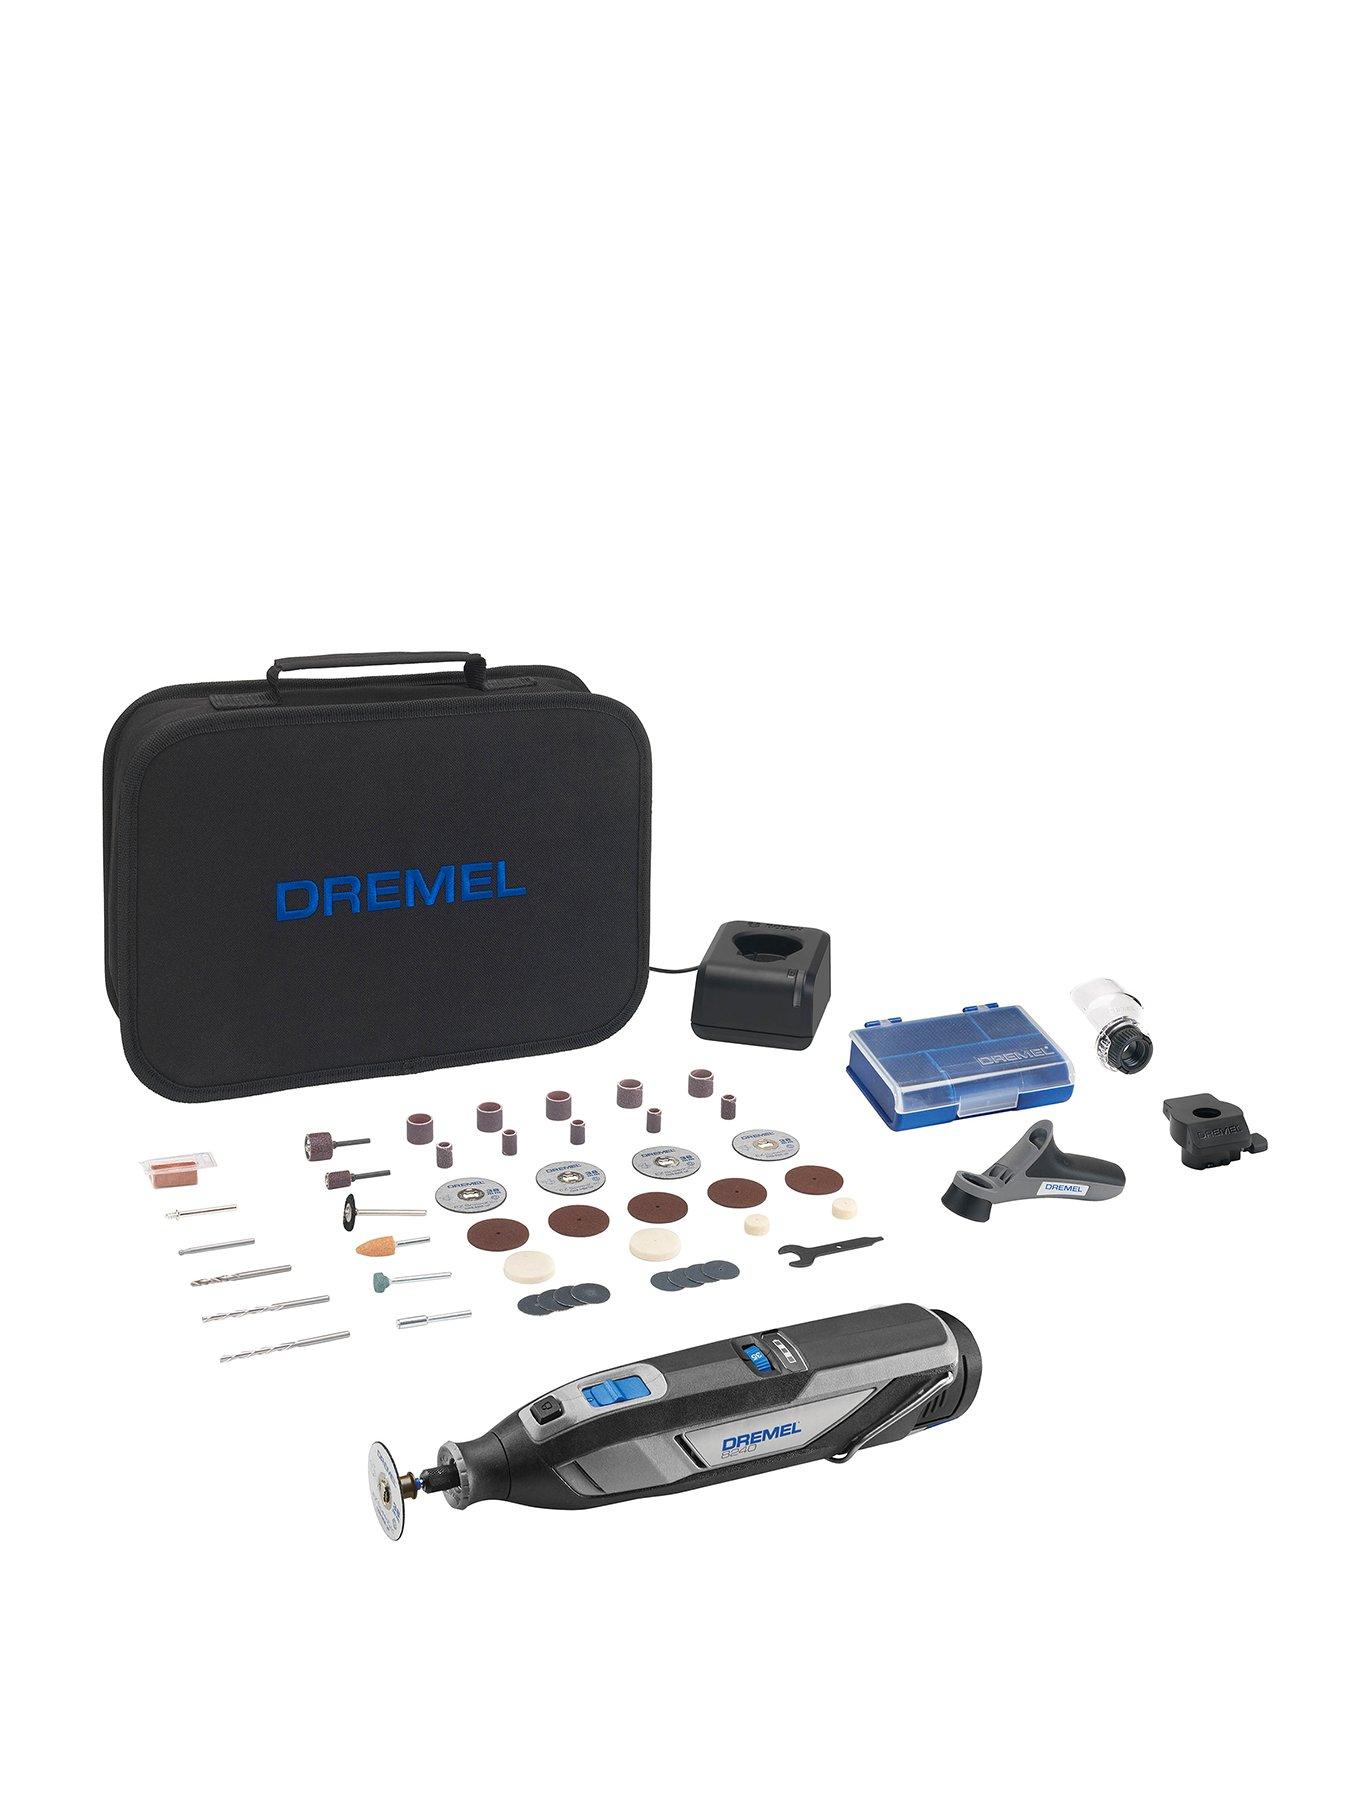 DREMEL 3000-1/25 Rotary Multi tool Kit, Variable Speed, 130 W, 230 V, 33000  rpm, UK Plug